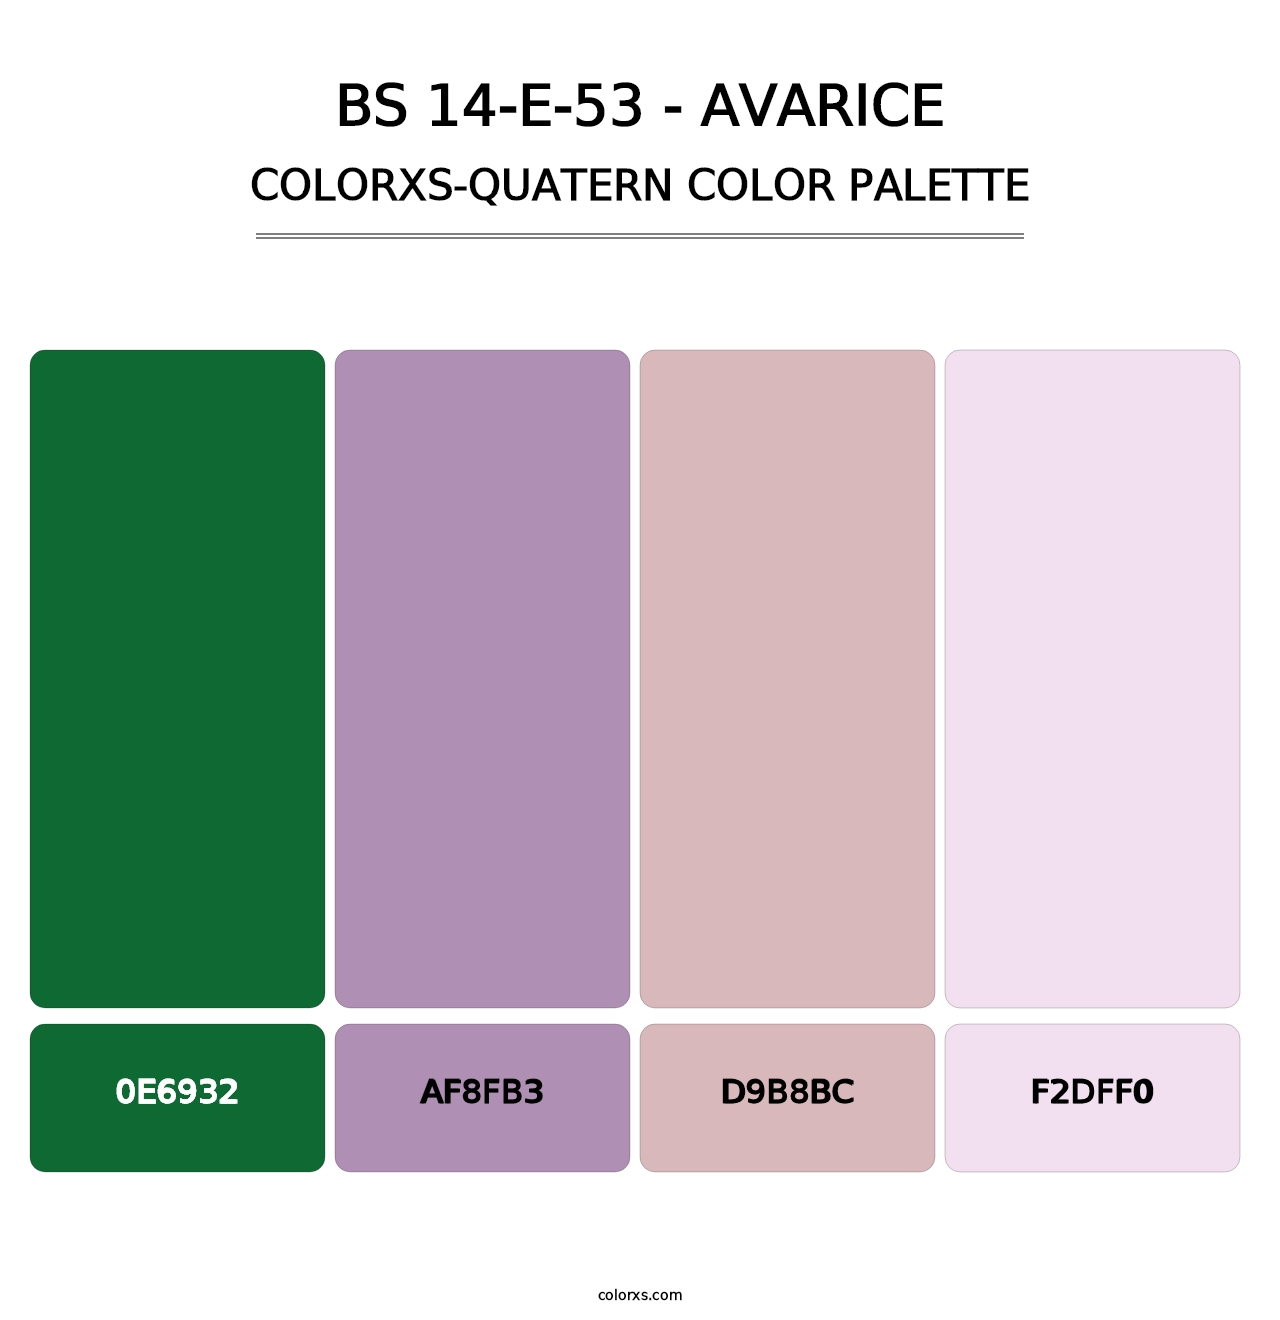 BS 14-E-53 - Avarice - Colorxs Quatern Palette